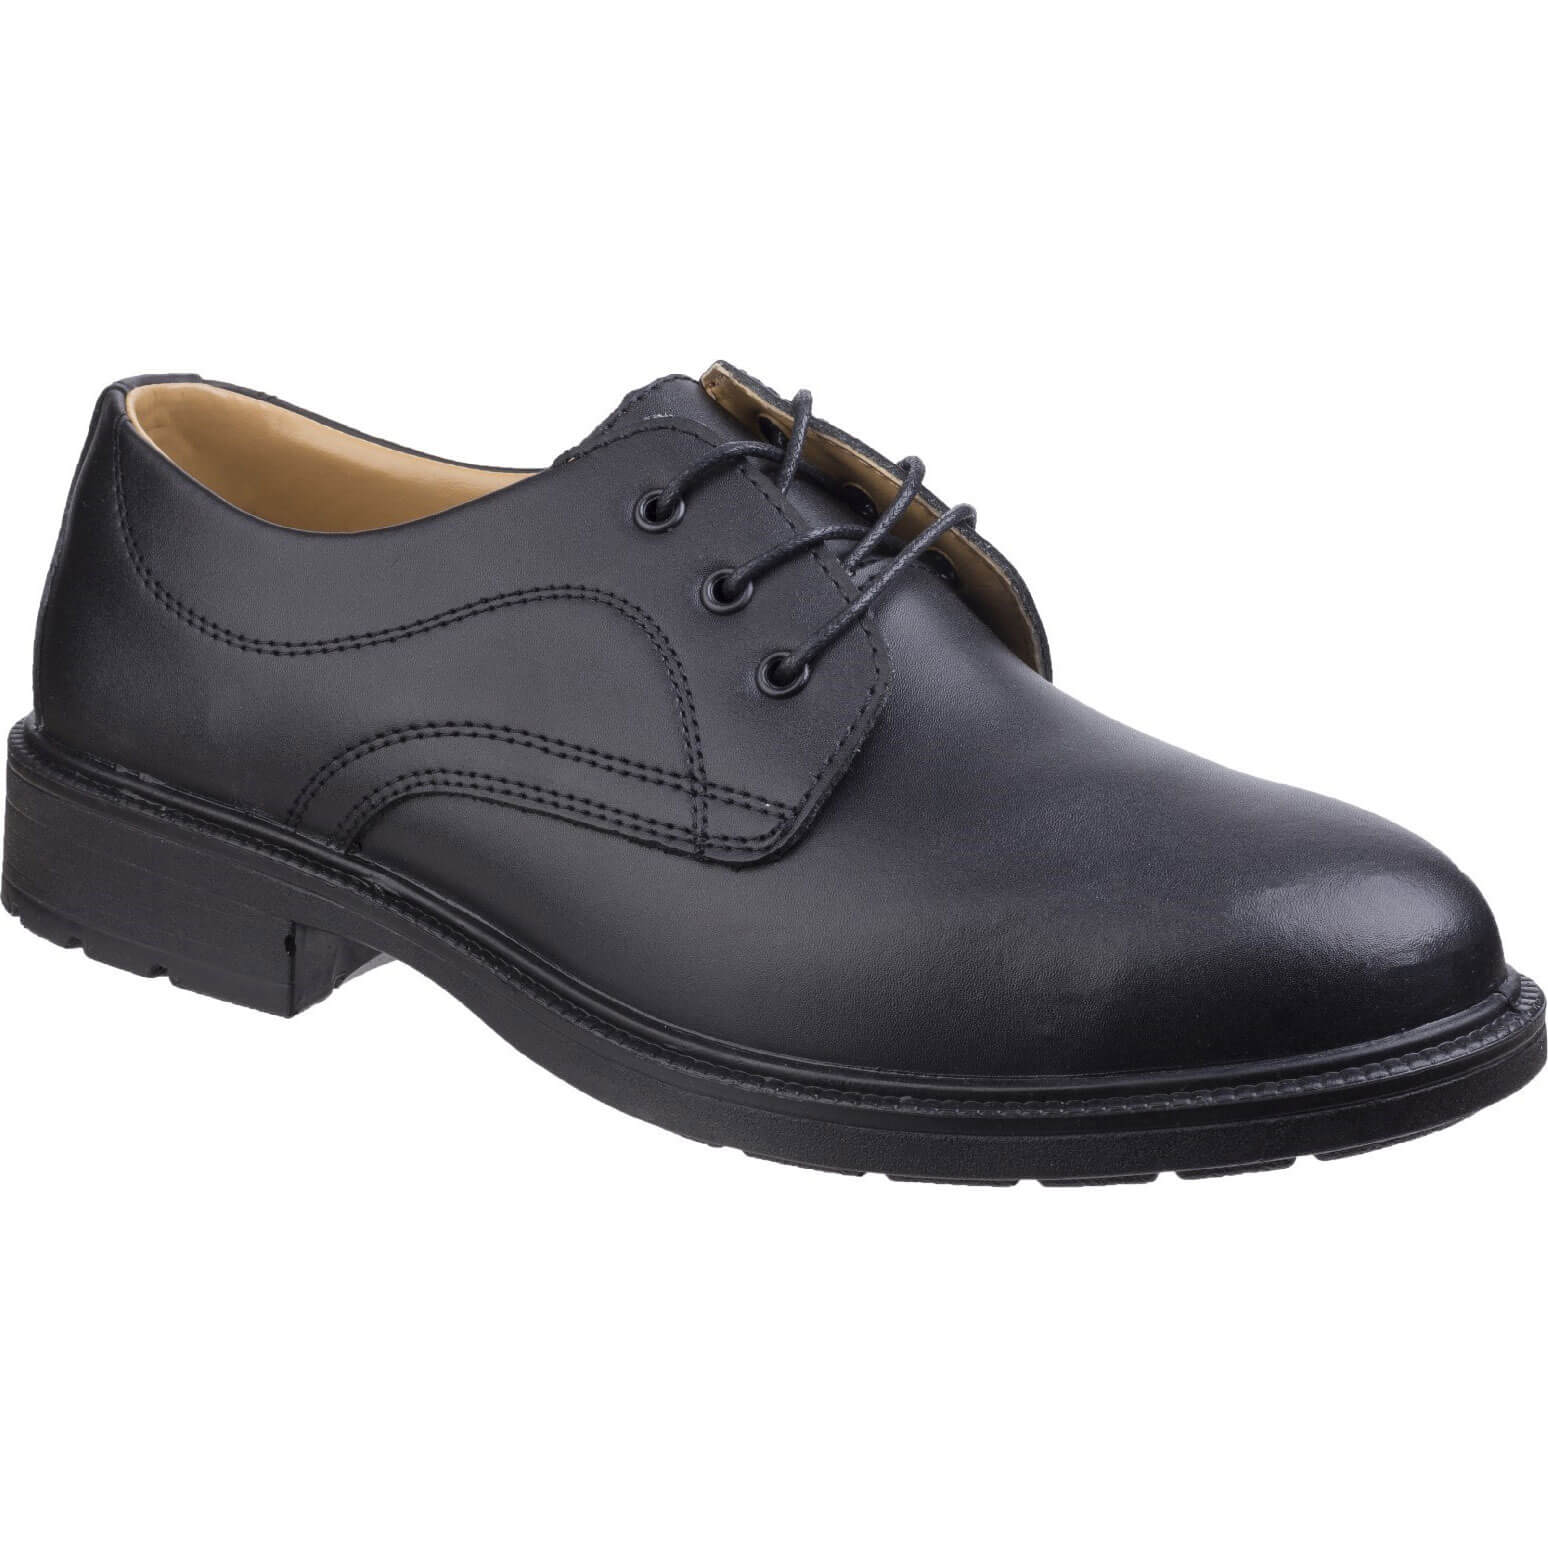 Image of Amblers Safety FS45 Safety Shoe Black Size 5